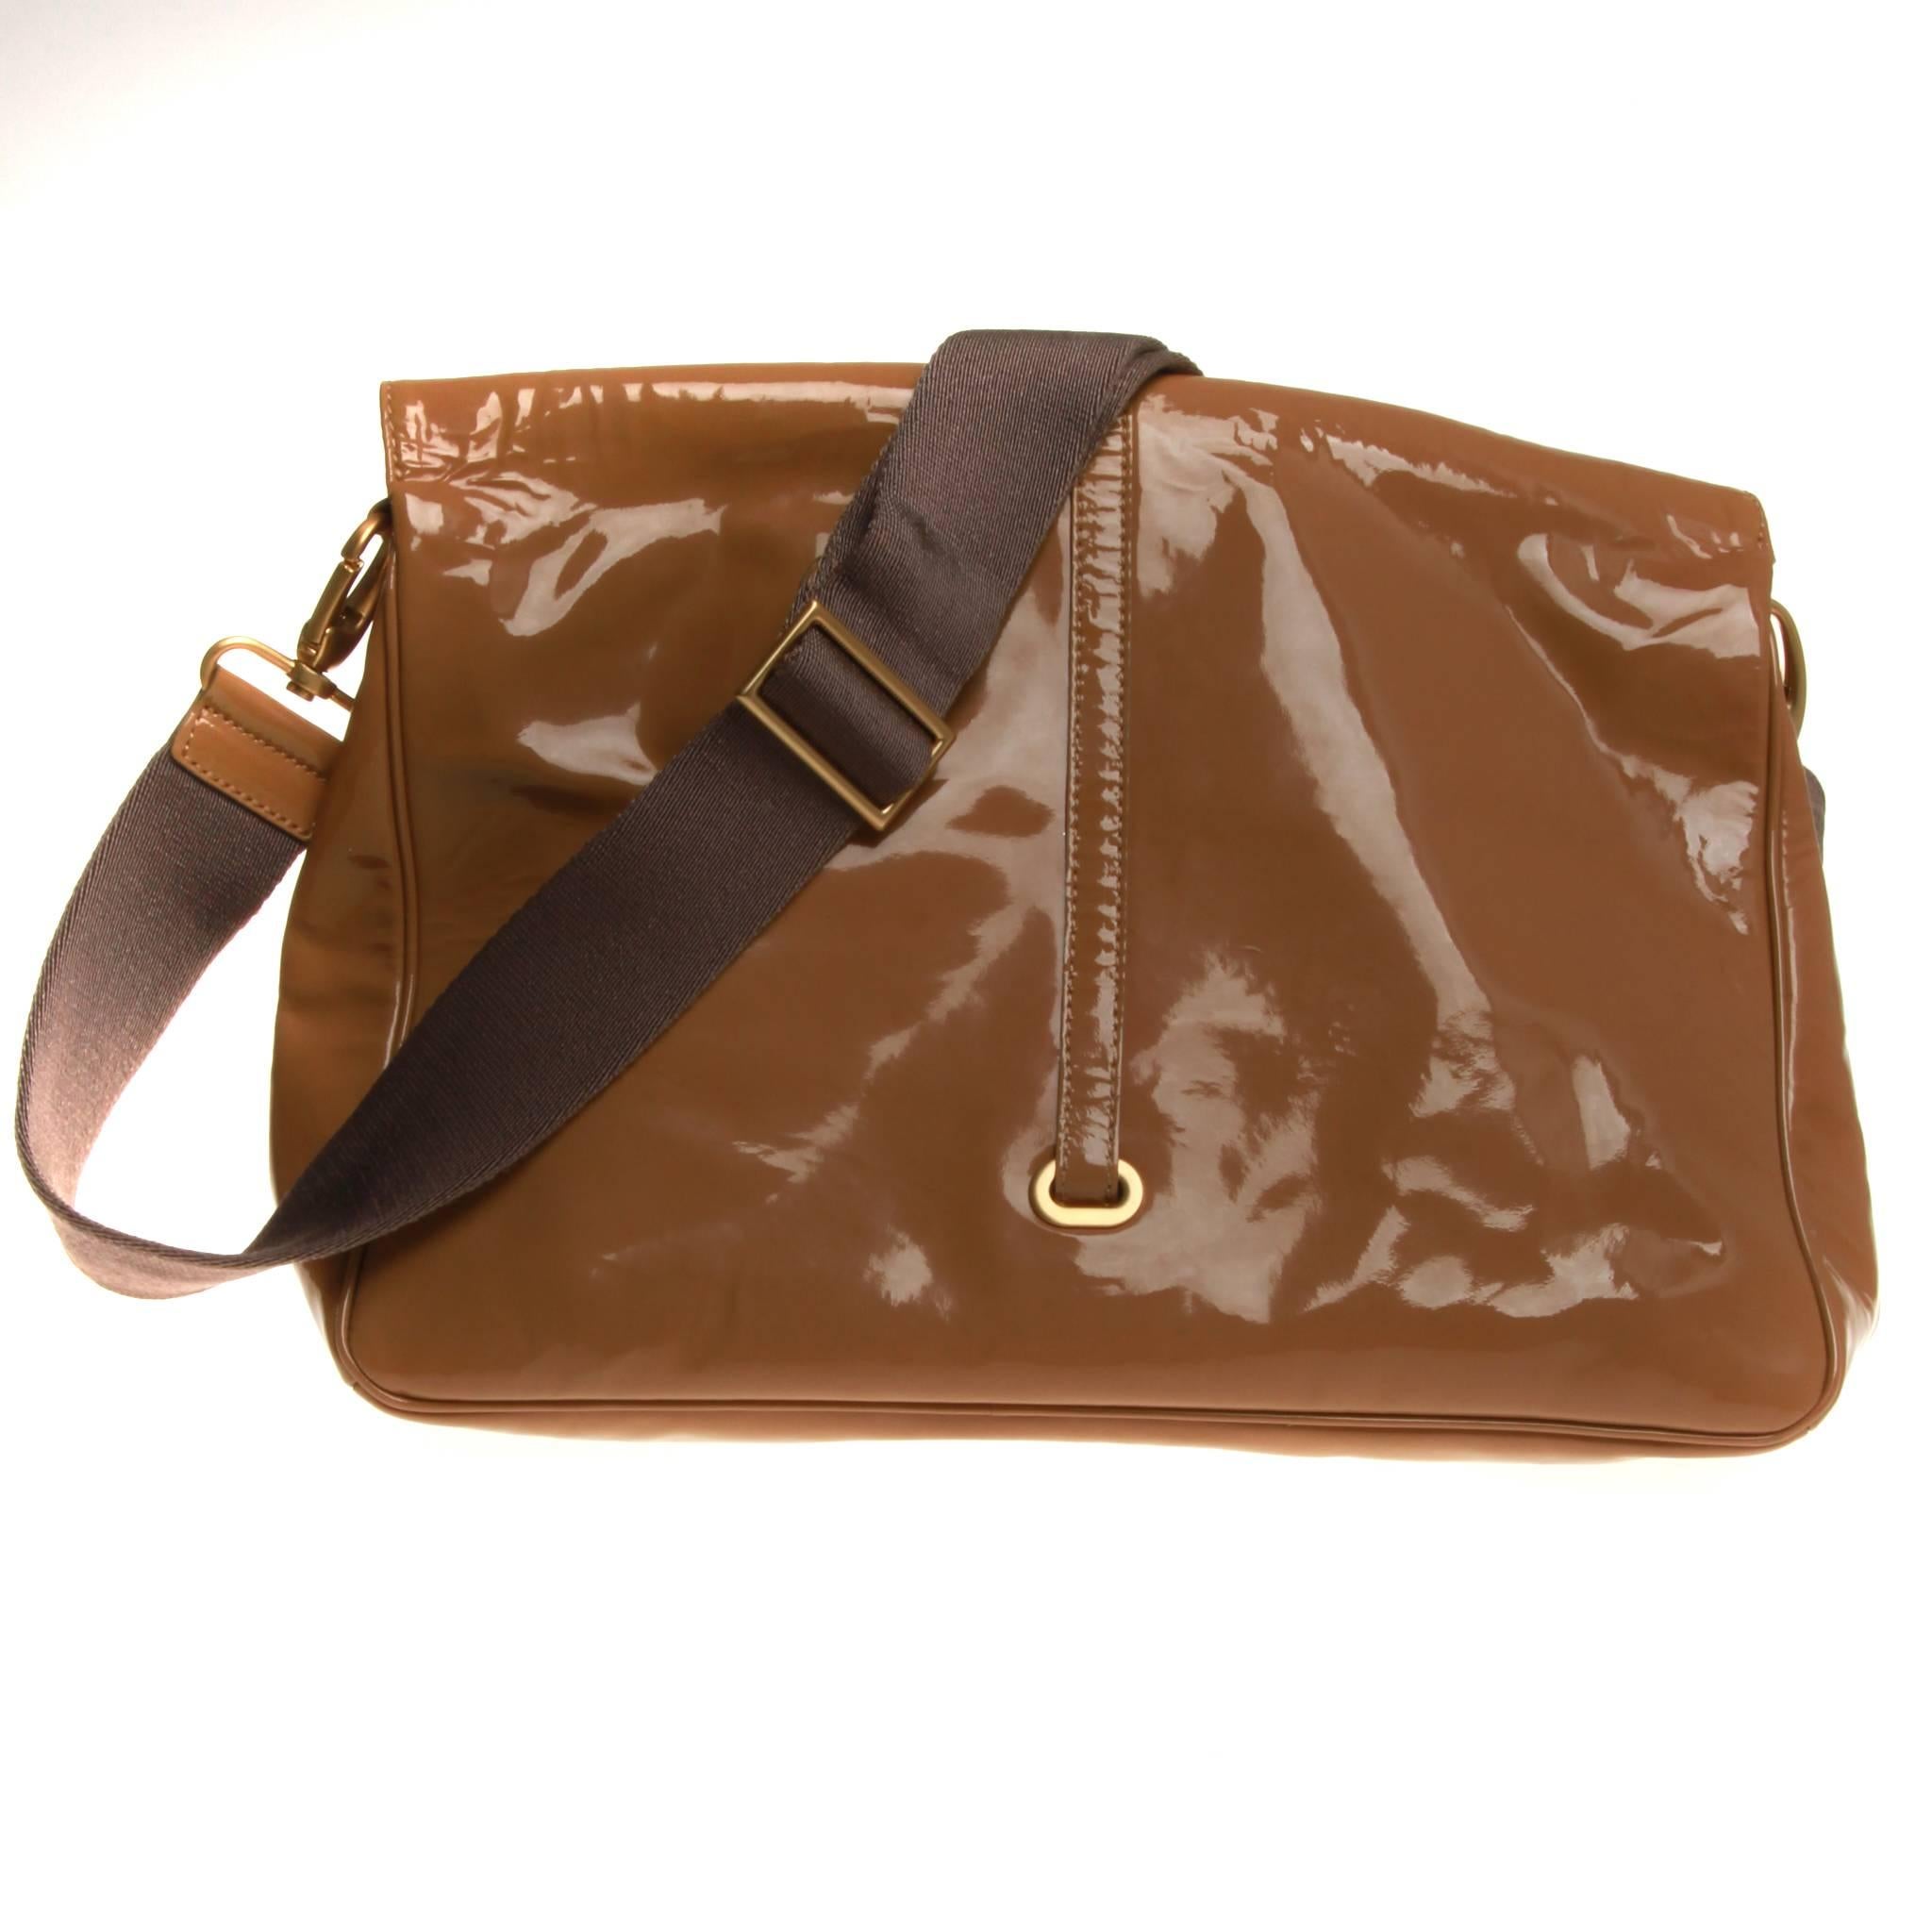 Women's or Men's Beige Patent Jimmy Choo Crossbody Handbag